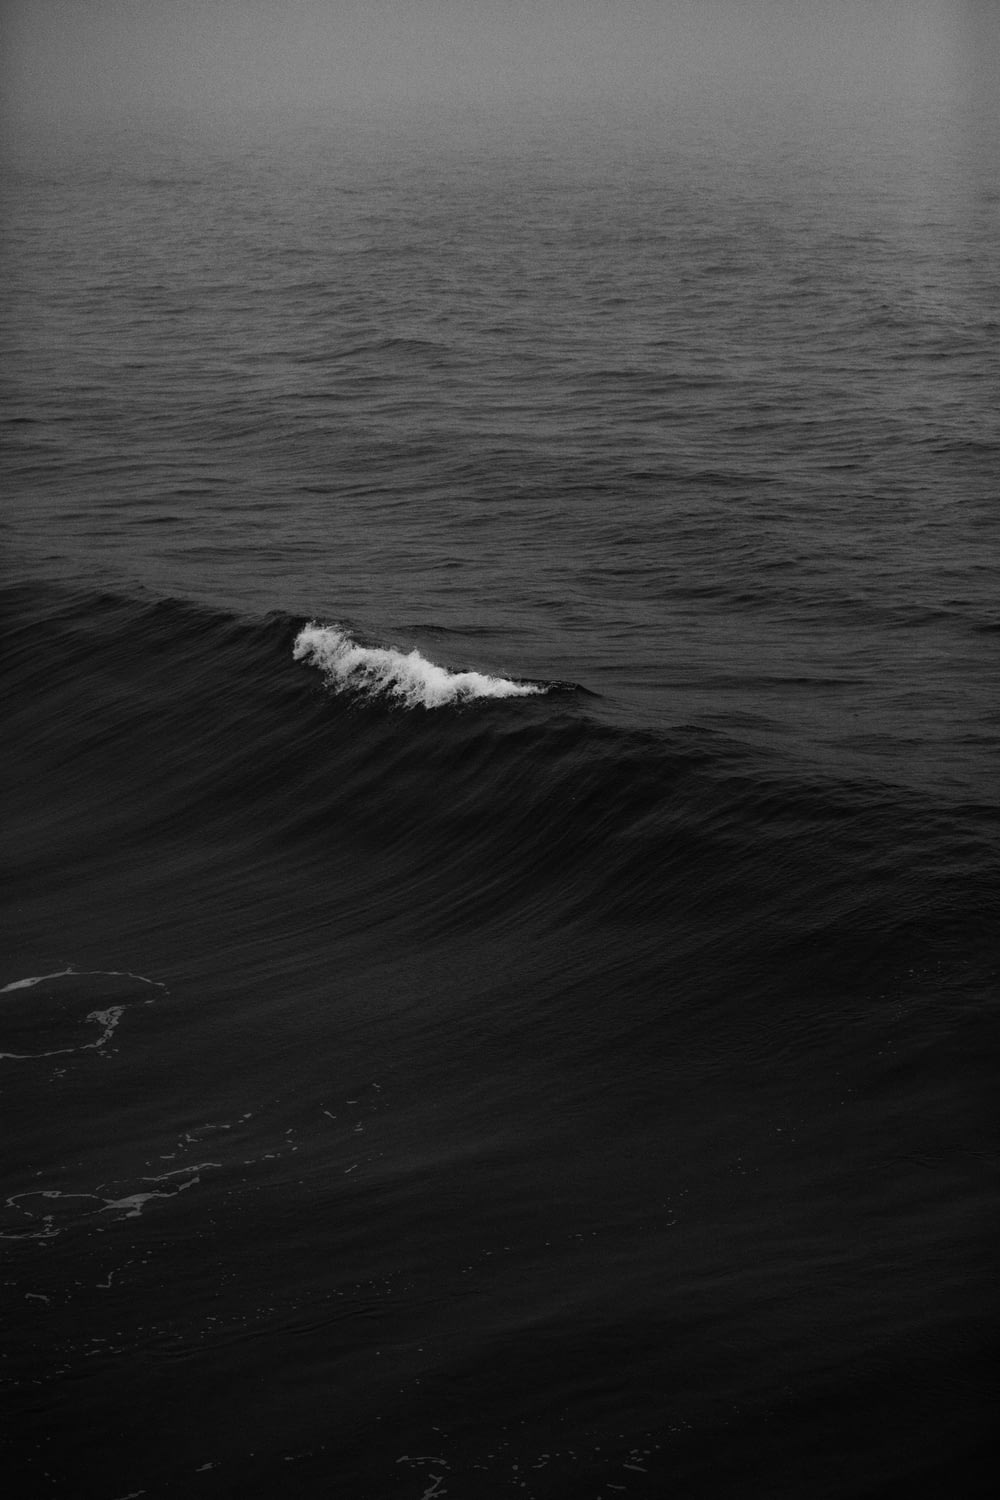 ocean wave in shallow focus lens